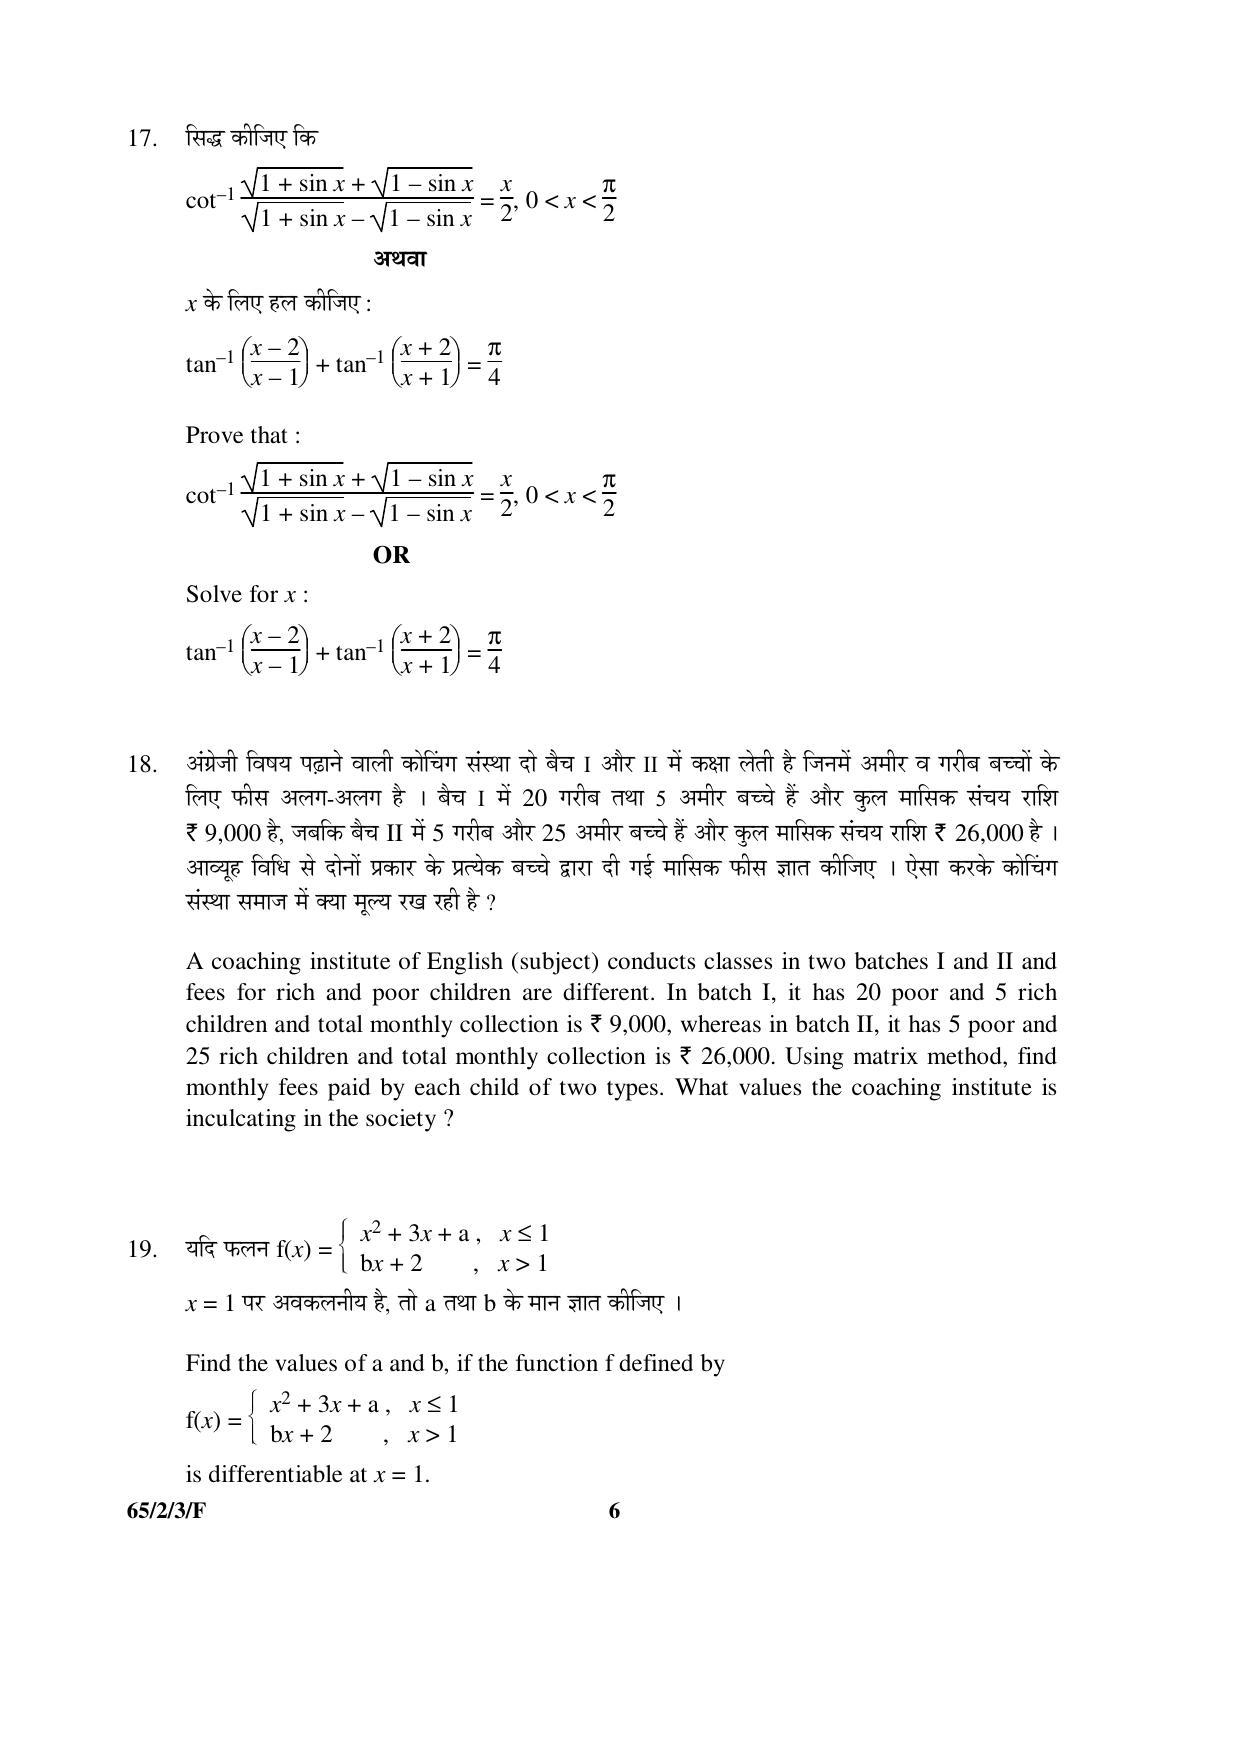 CBSE Class 12 65-2-3-F _Mathematics_ 2016 Question Paper - Page 6